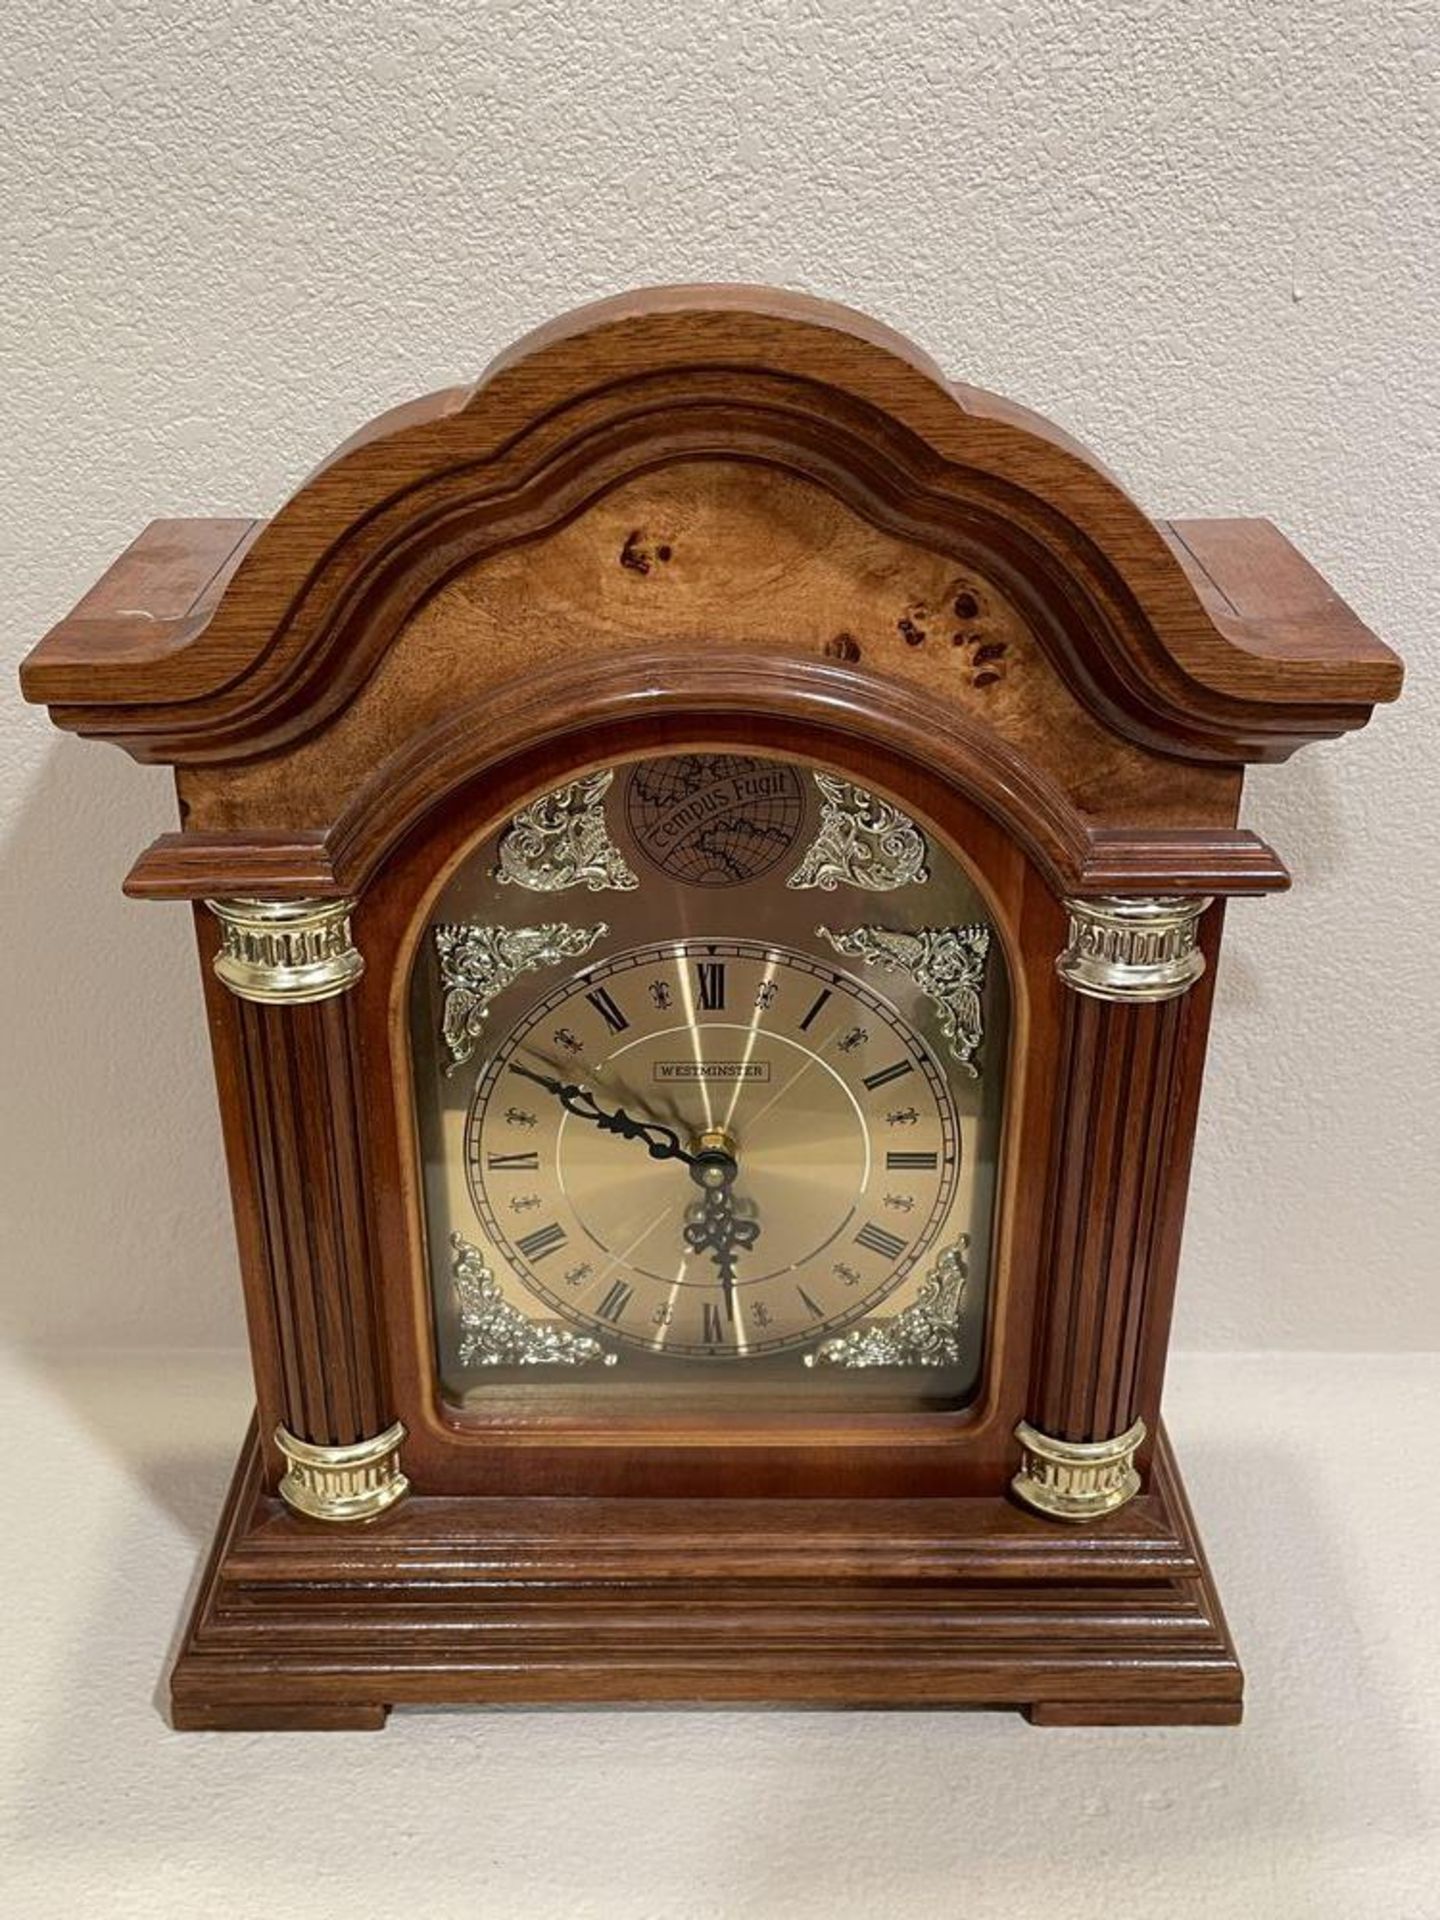 Westminster Wood Antique Looking Clock Quartz - 16.5" x 13" - Image 2 of 7